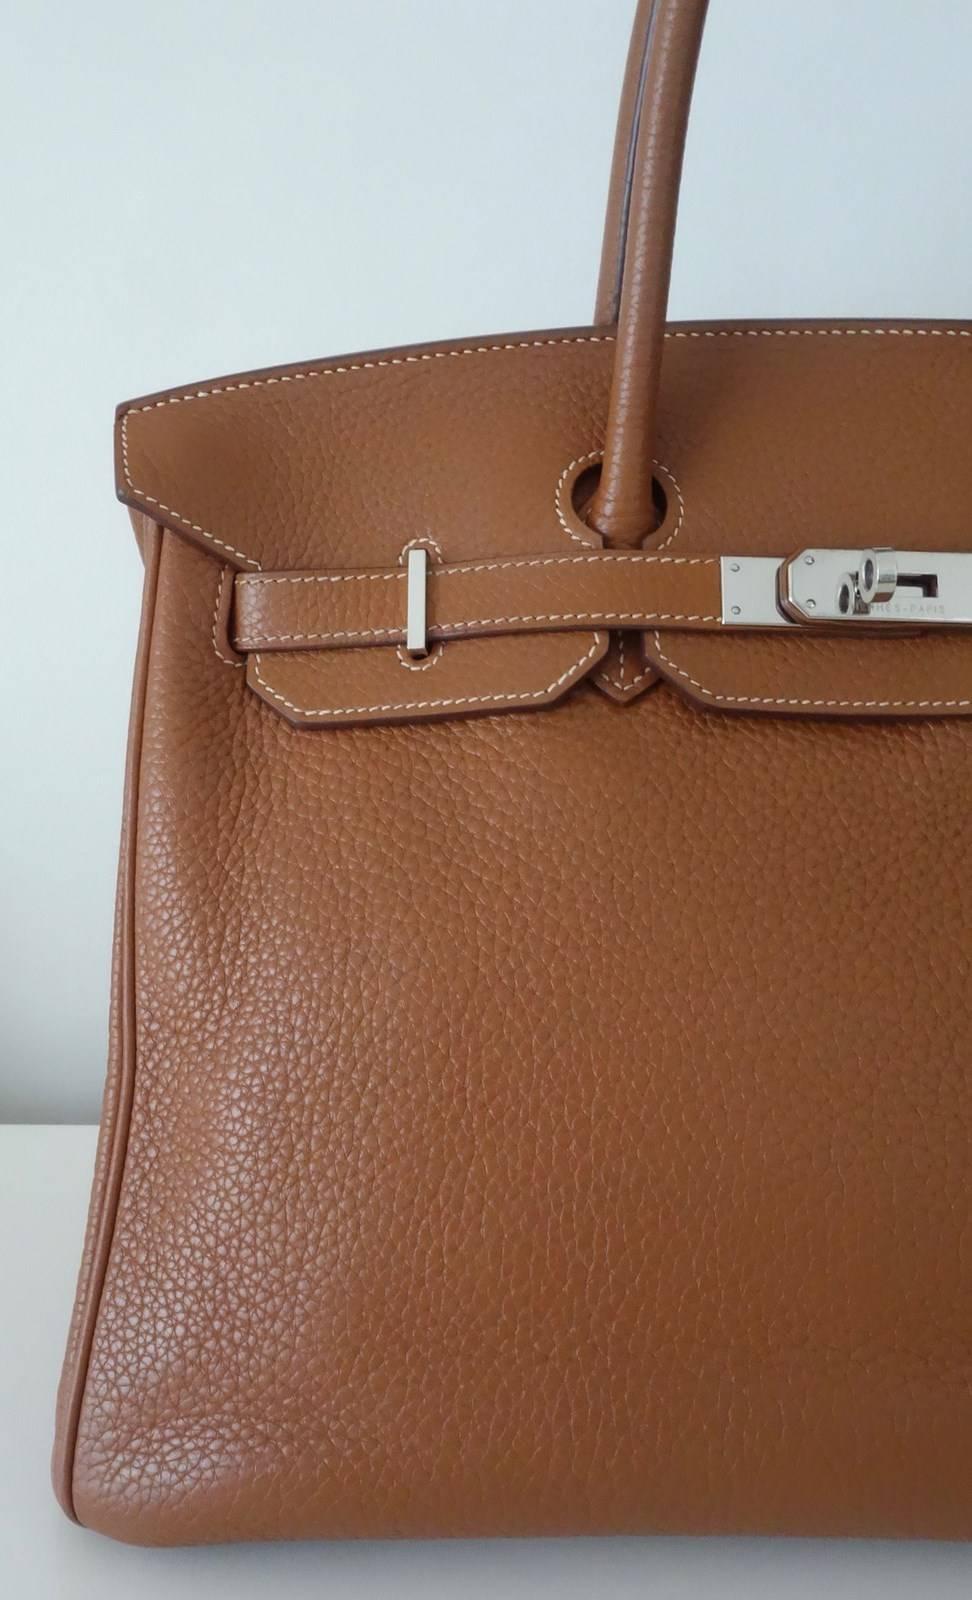 Hermes Birkin Handbag Gold Taurillon Clemence Leather PHW 35 cm 5